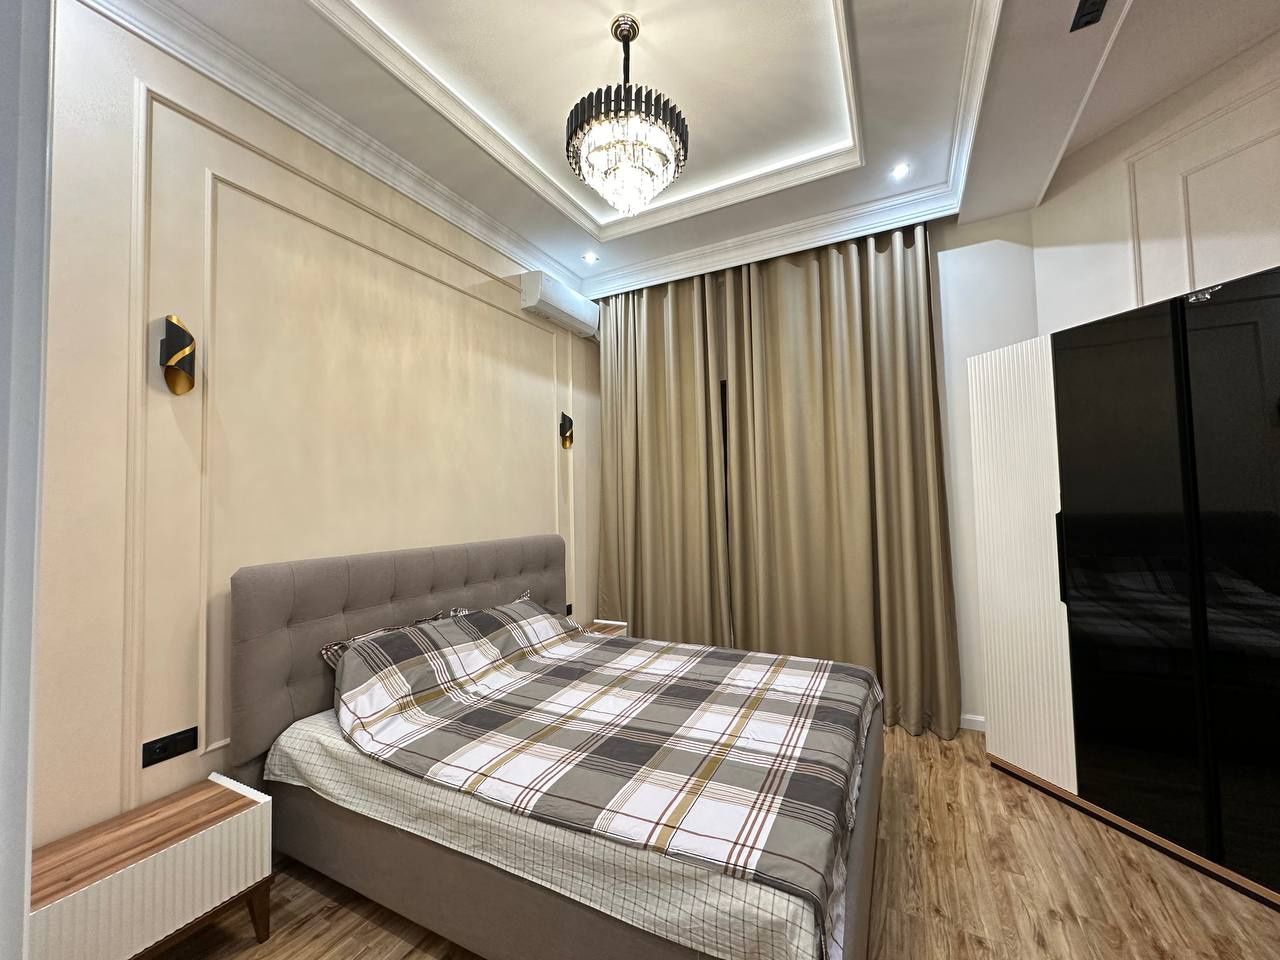 Apartment for rent in Tashkent / Тошкент шахрида квартира иджарага